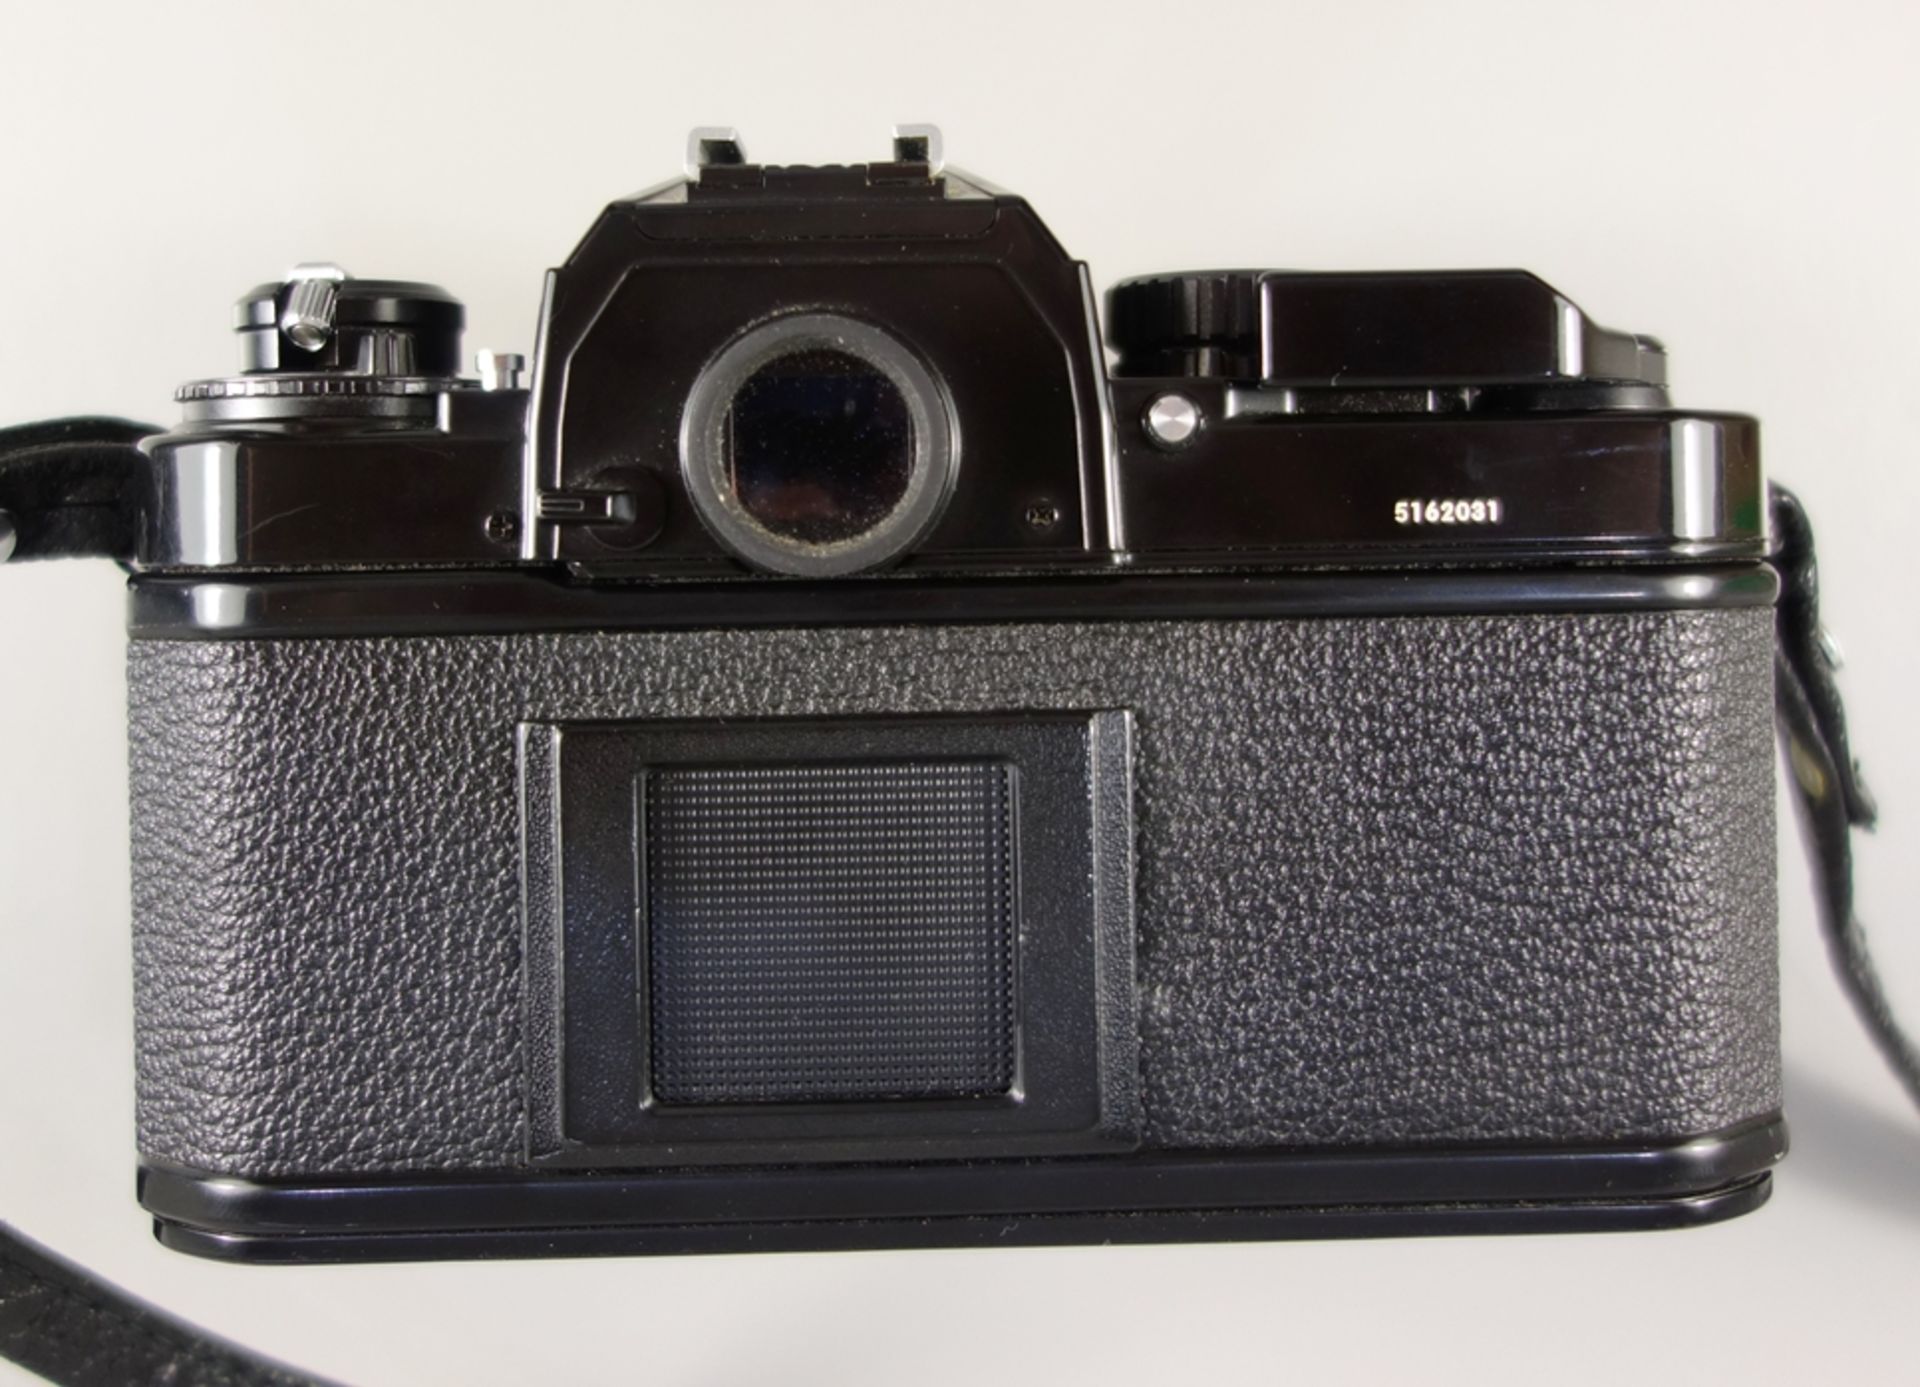 Nikon FA, Spiegelreflexkamera, schwarz, Serien-Nr. 5162031, mit Objektiv Nikon Lens Series E, 50mm - Bild 3 aus 4